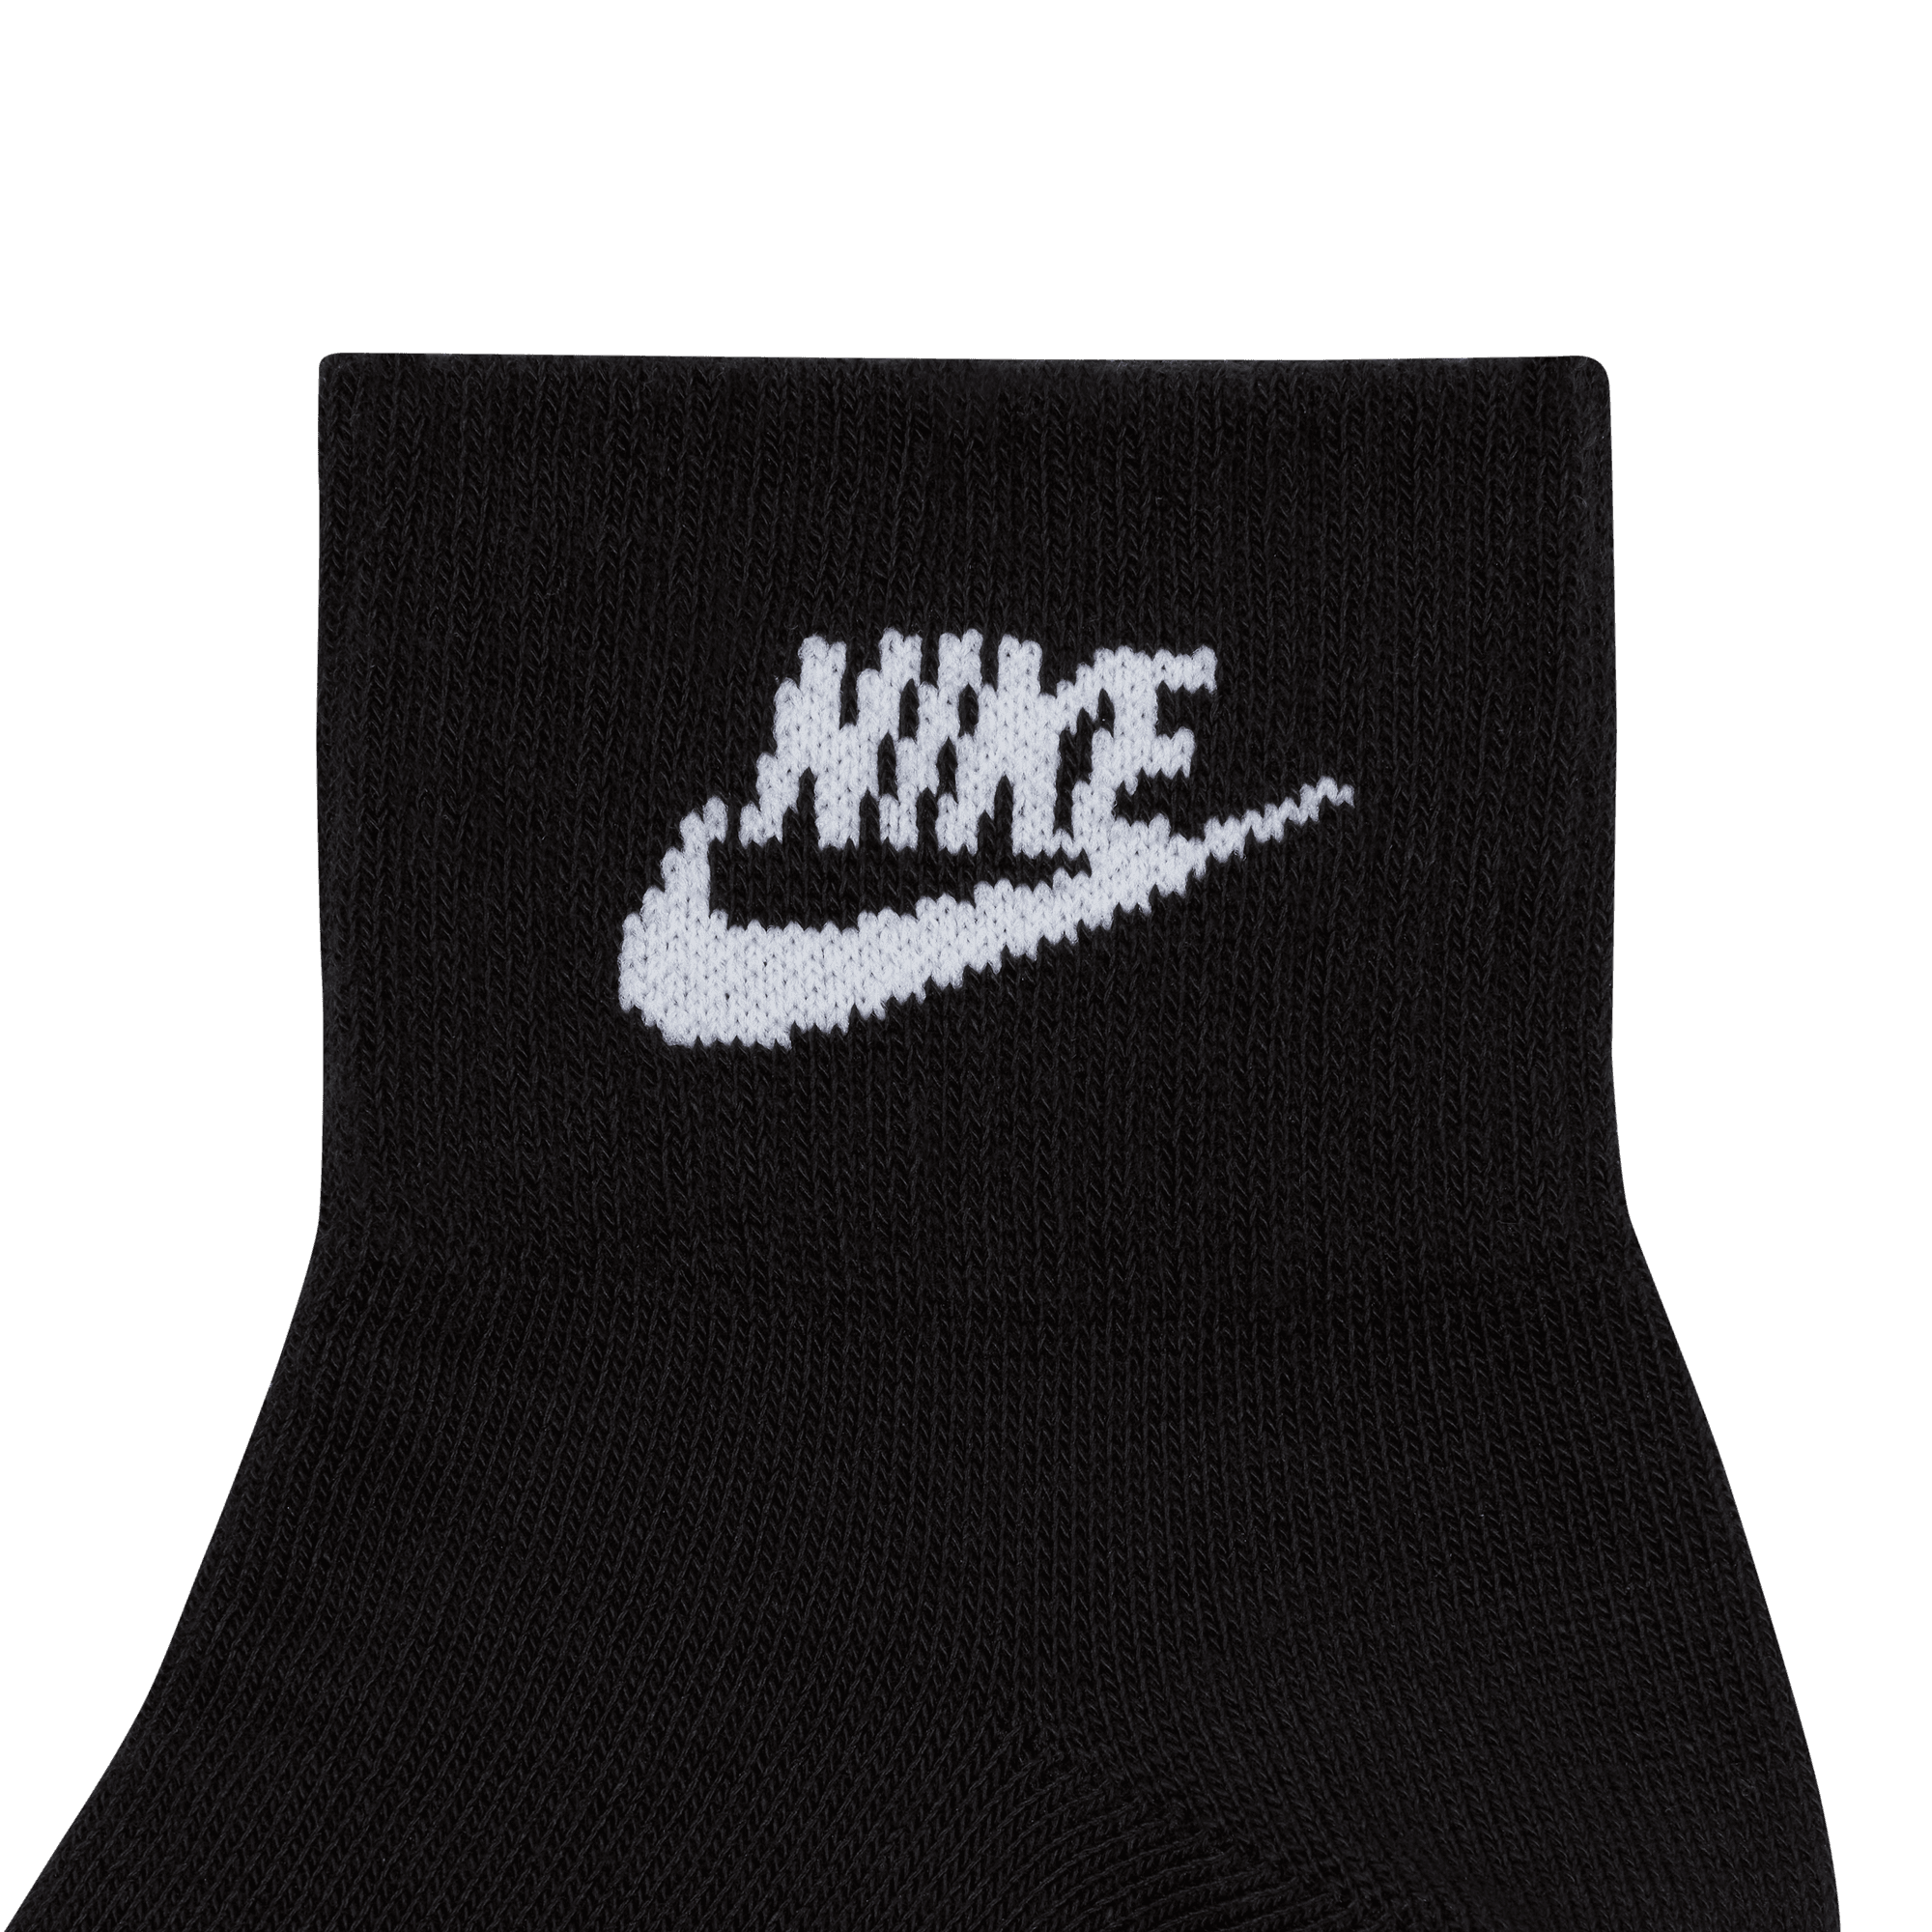 Nike Everyday Essential Ankle Socks (3 Pairs) DX5074-010